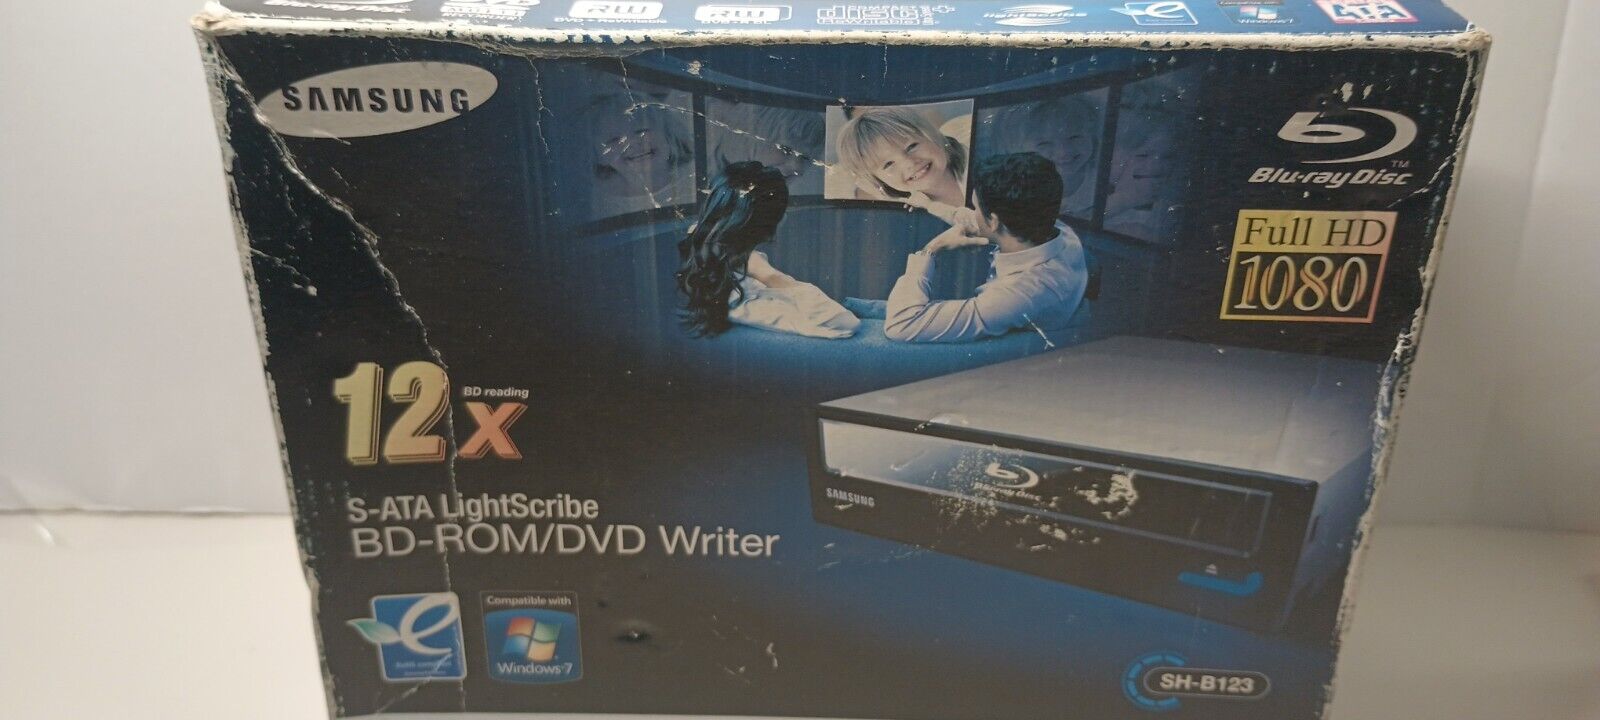 Samsung 12x S-ata Lightscribe BD-Rom/DVD Writer Blu-ray HD 1080 (New Old Stock)